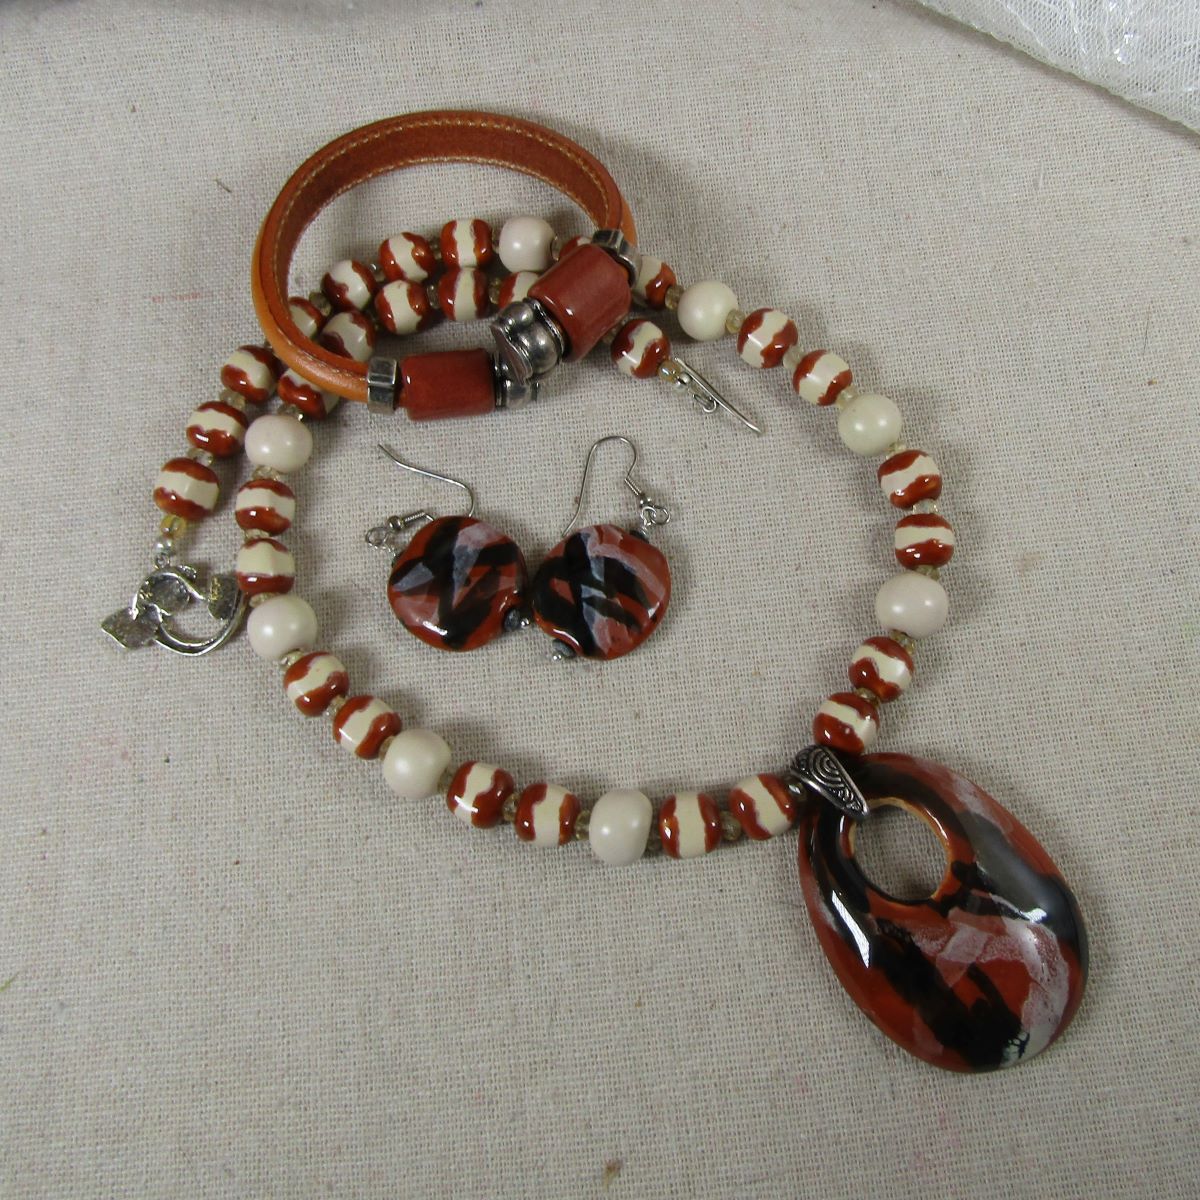 Cream & Toast Kazuri Necklace, Earring & Memory Wire Regaliz Bracelet - VP's Jewelry 